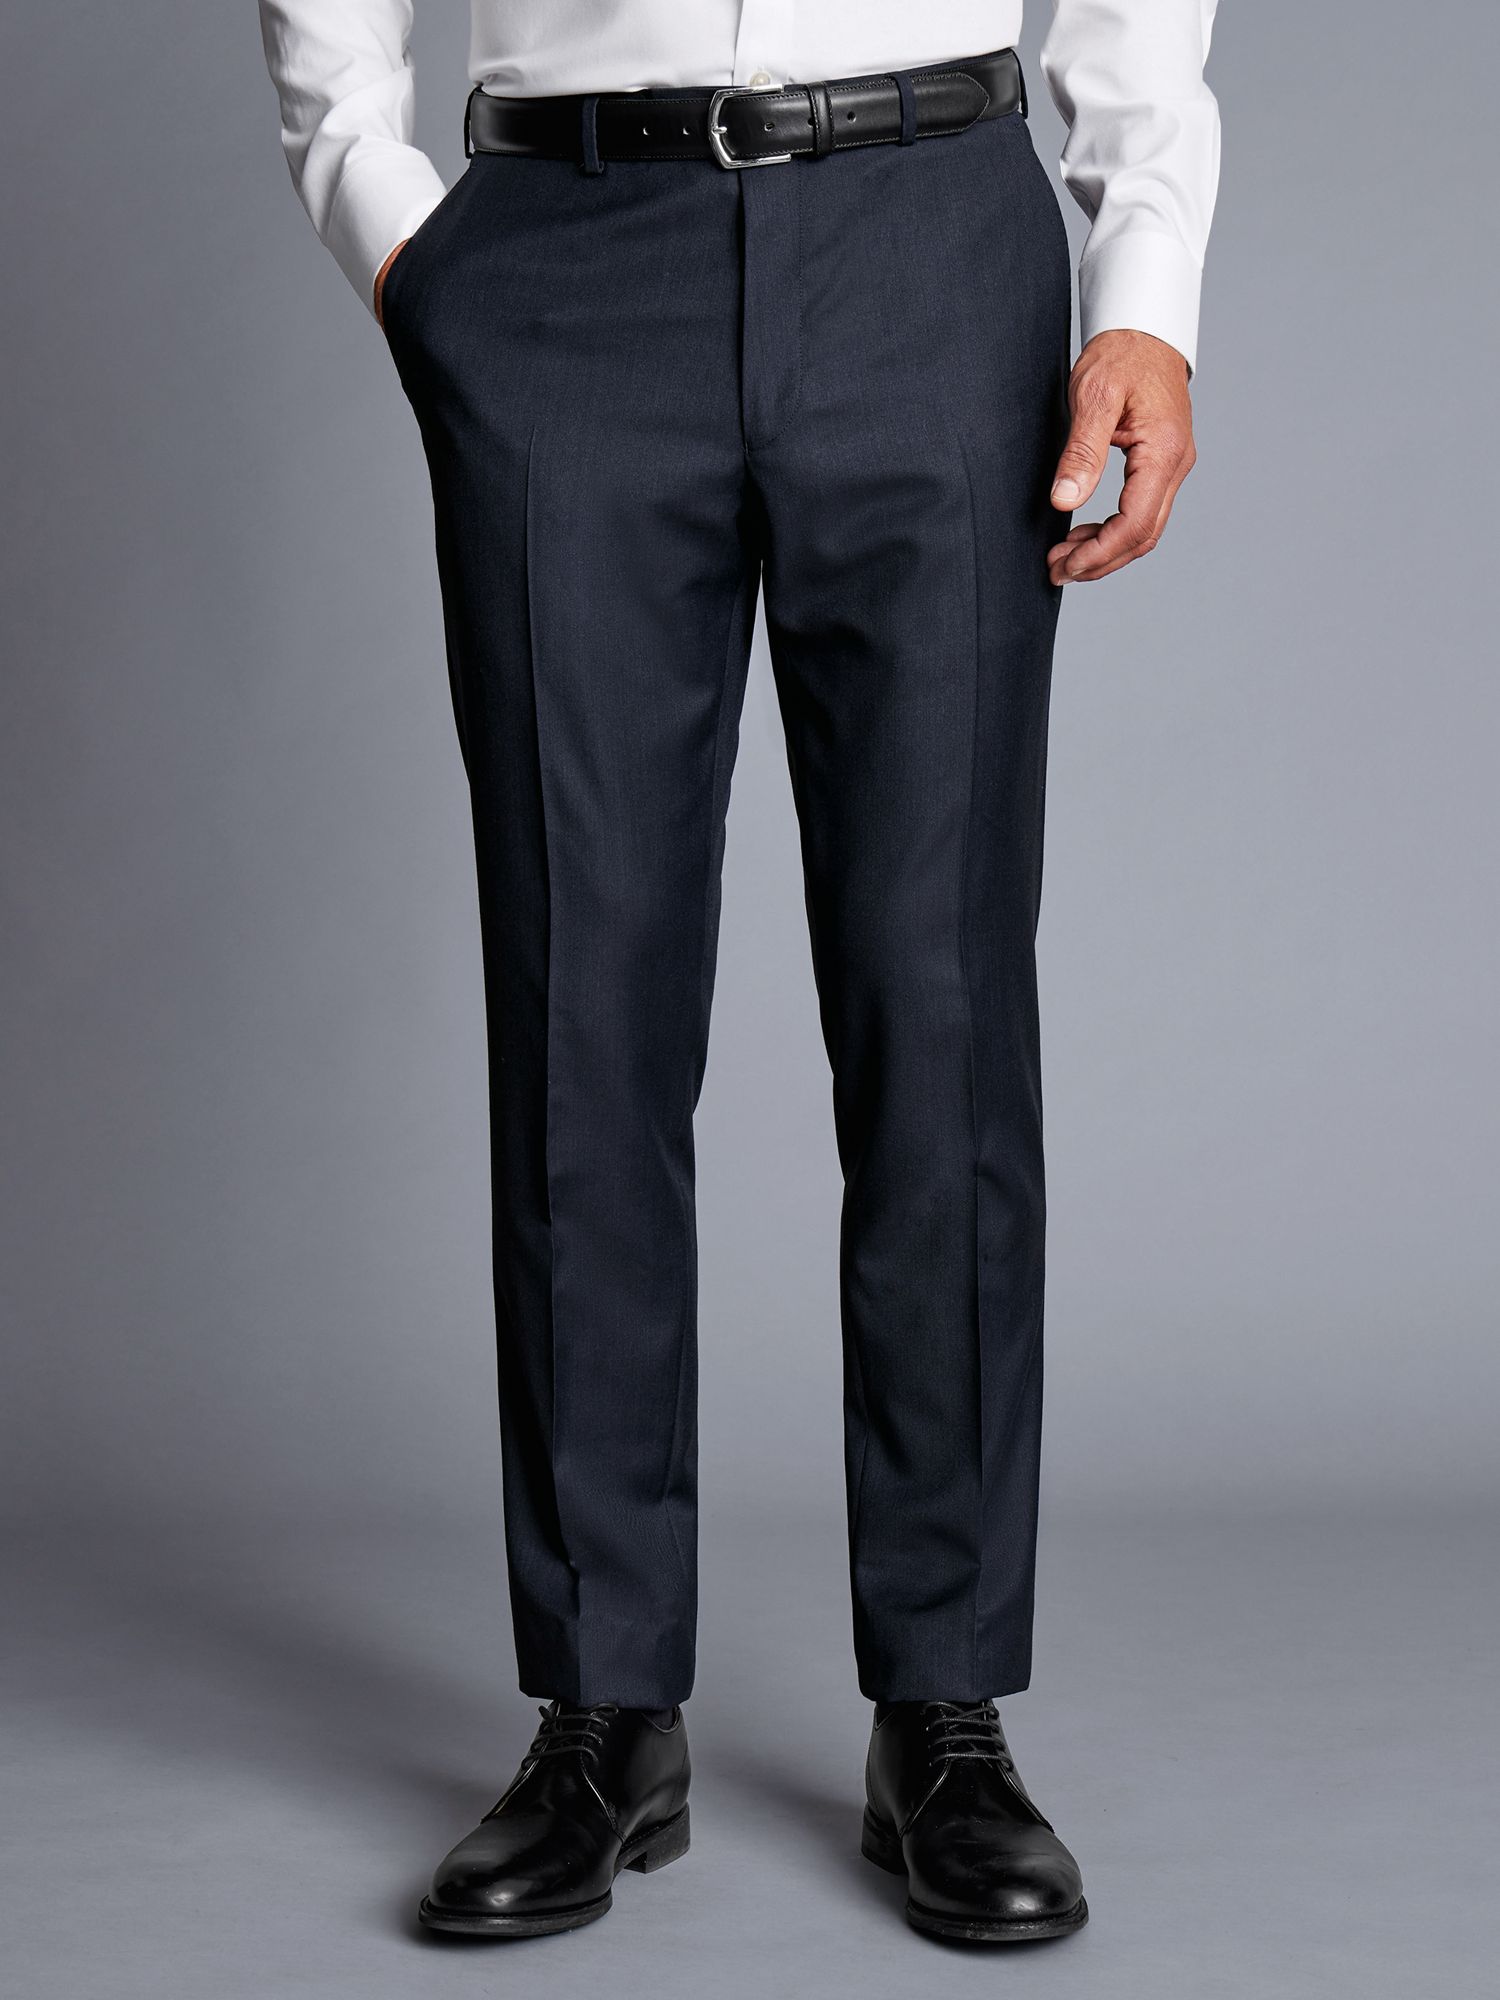 Charles Tyrwhitt Slim Fit Italian Twill Suit Trousers, Navy